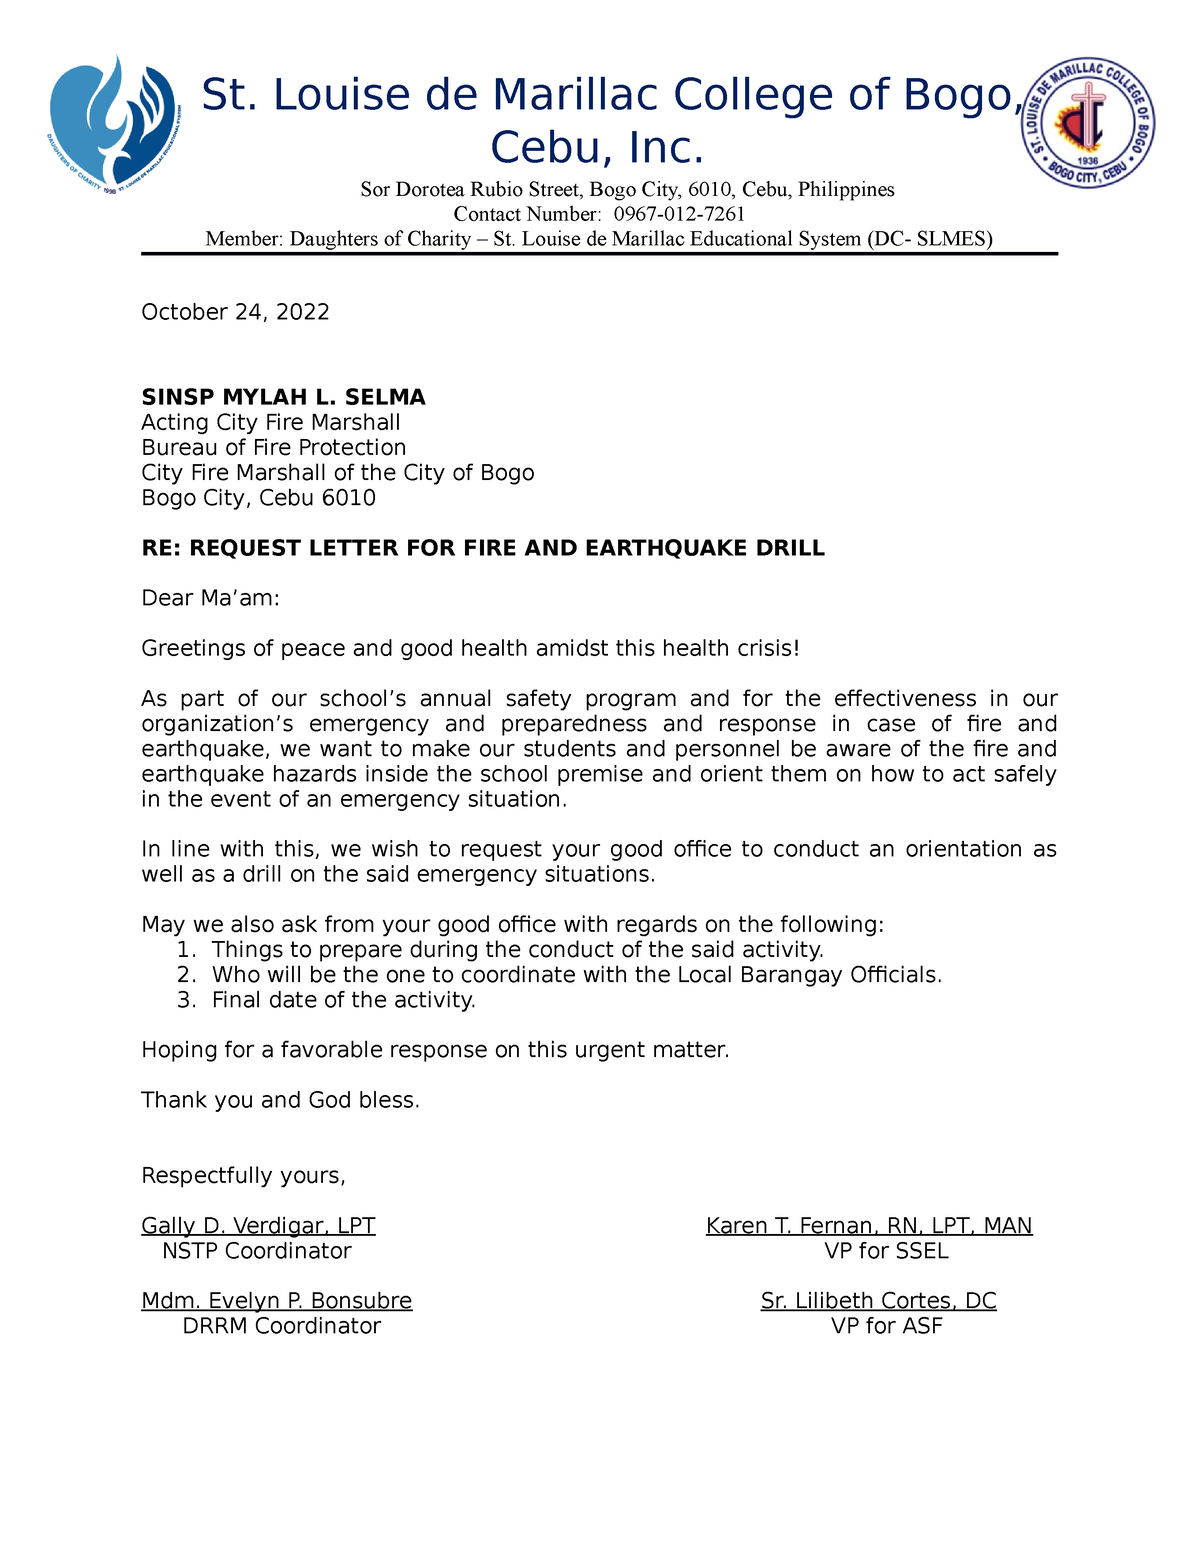 Fire Safety Certificate For School Zebar School - vrogue.co